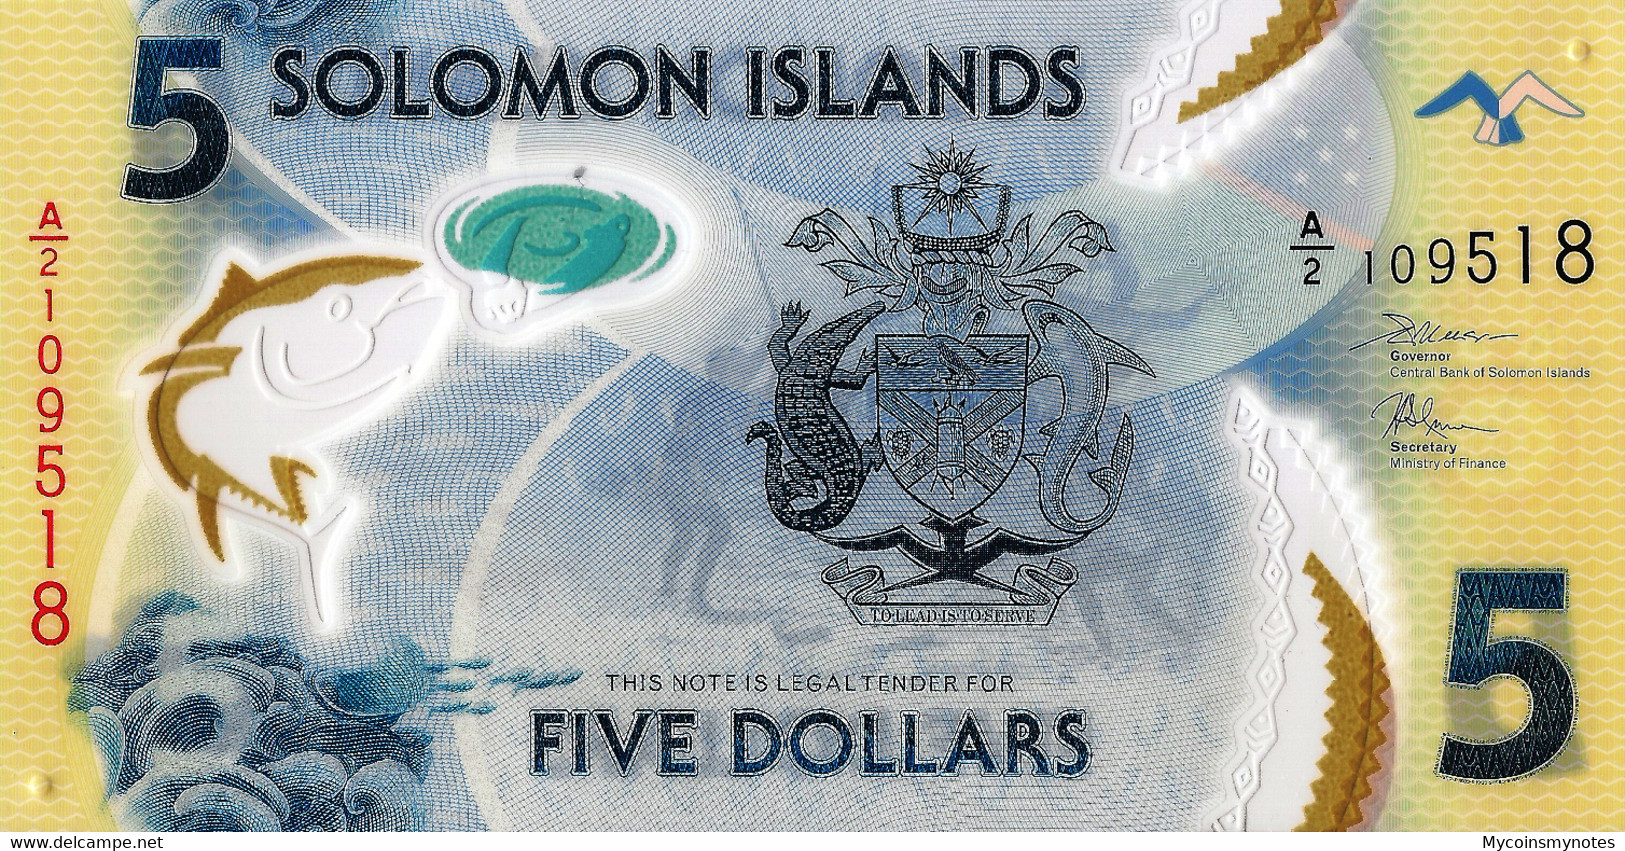 SOLOMON ISLAND, 5 DOLLAR, 2019, P-NEW, Polymer, UNC - Solomonen